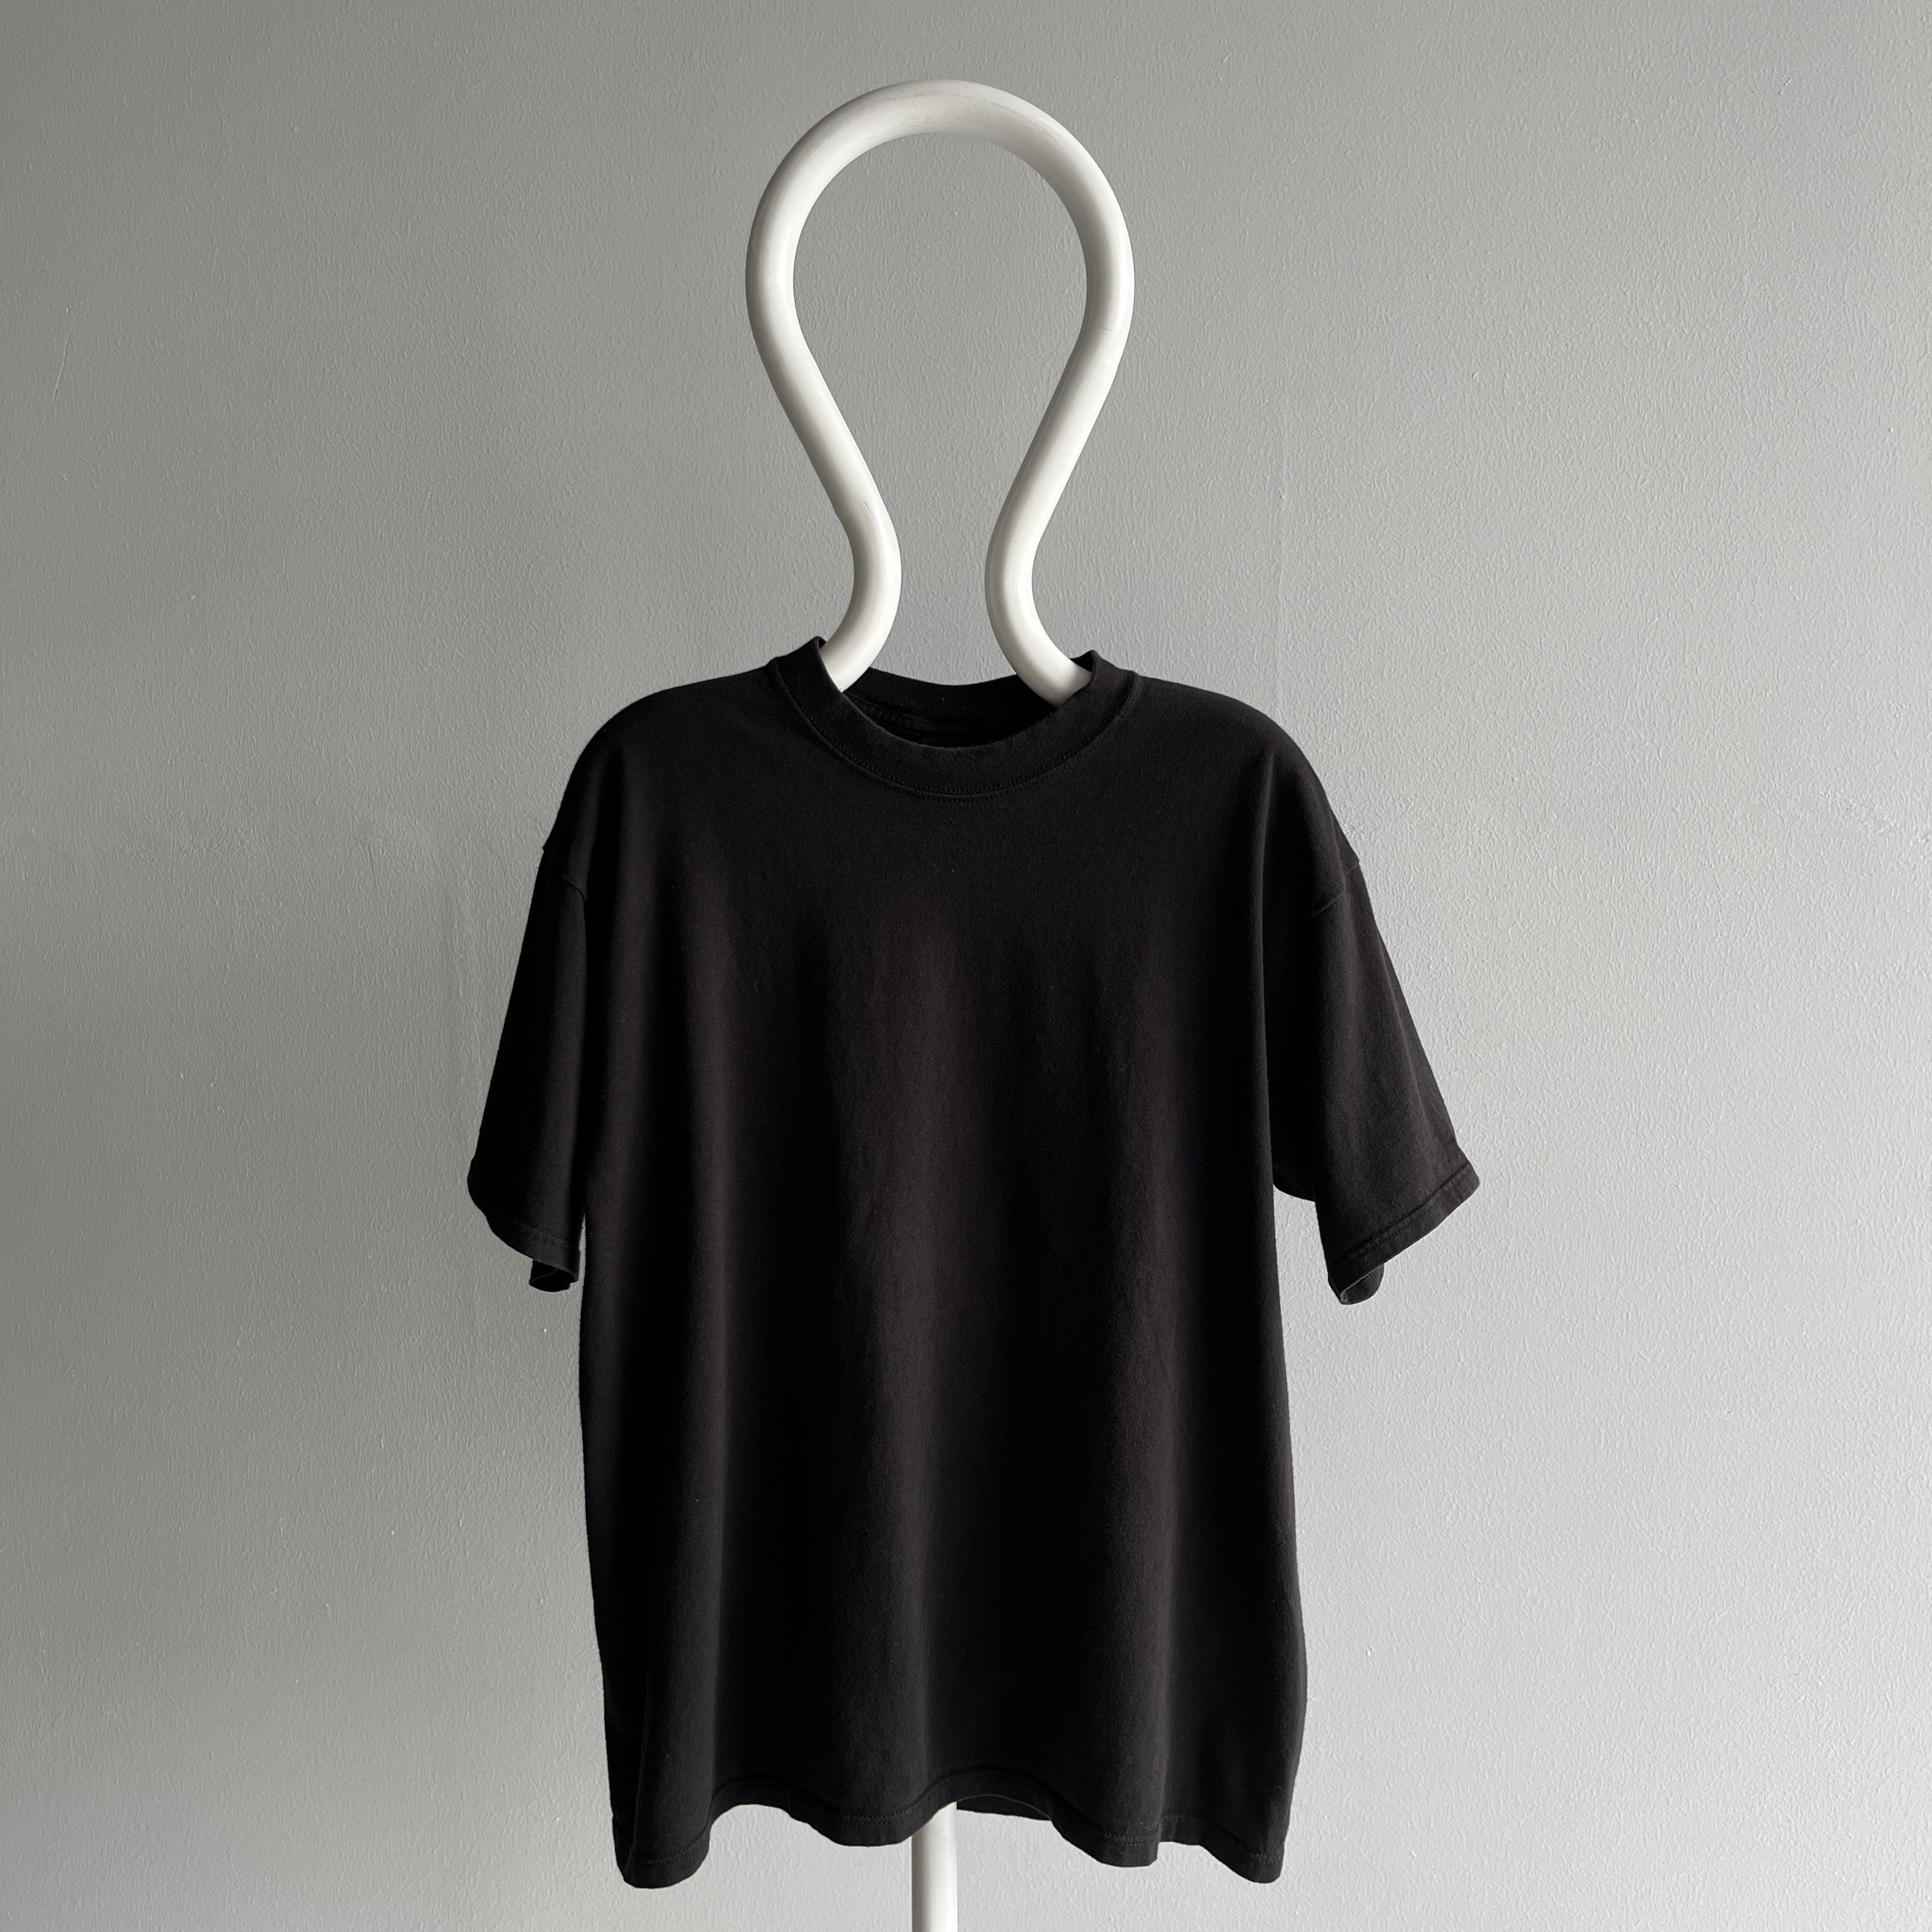 1990s Soffe's Choice Blank Black Cotton T-Shirt